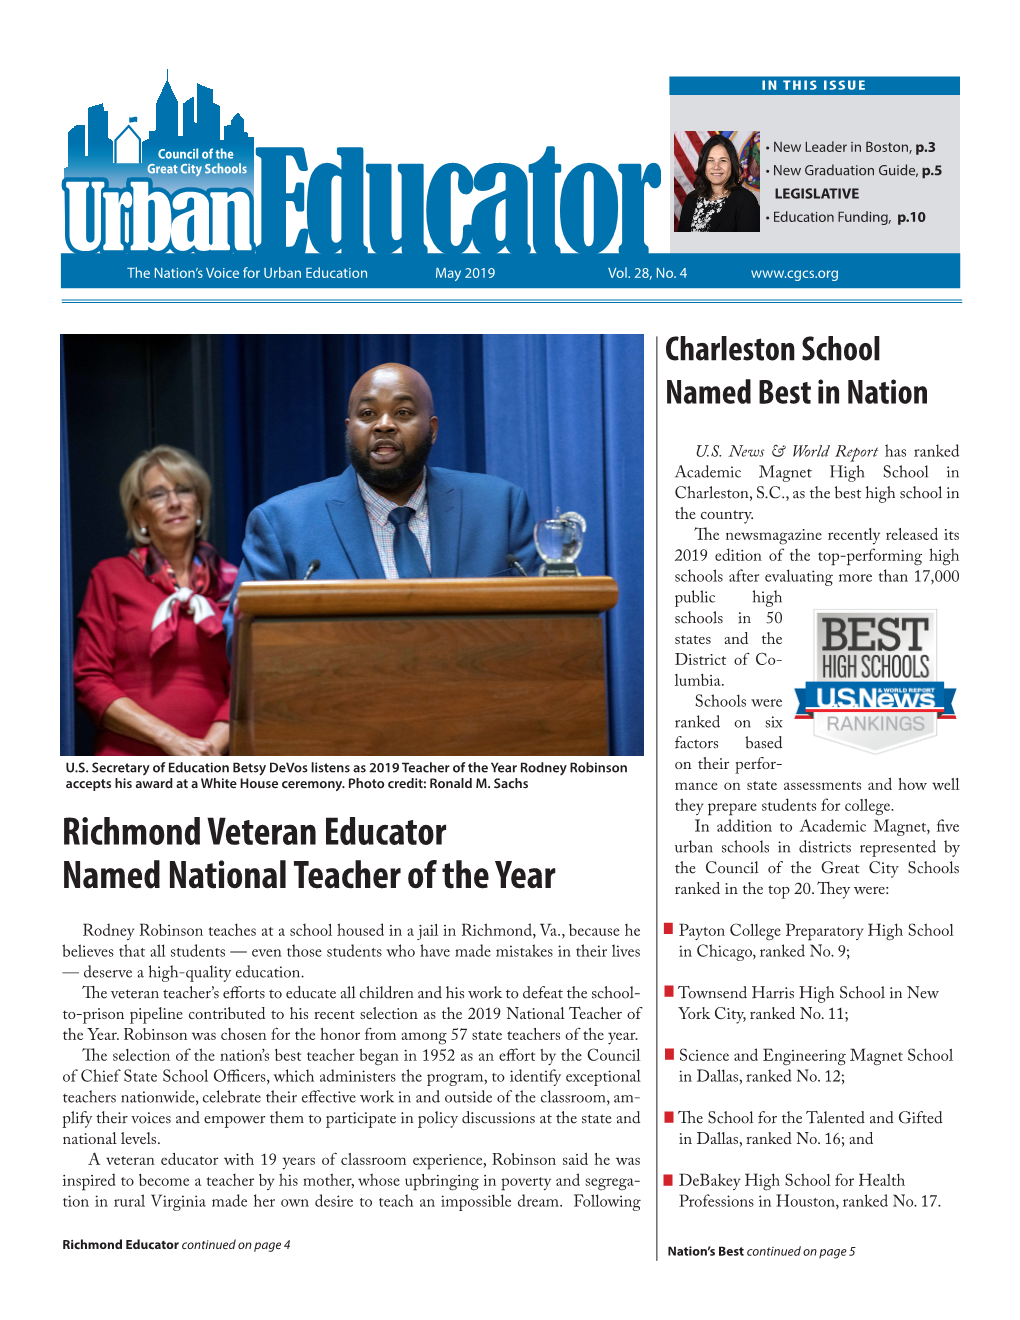 Richmond Veteran Educator Named National Teacher of the Year